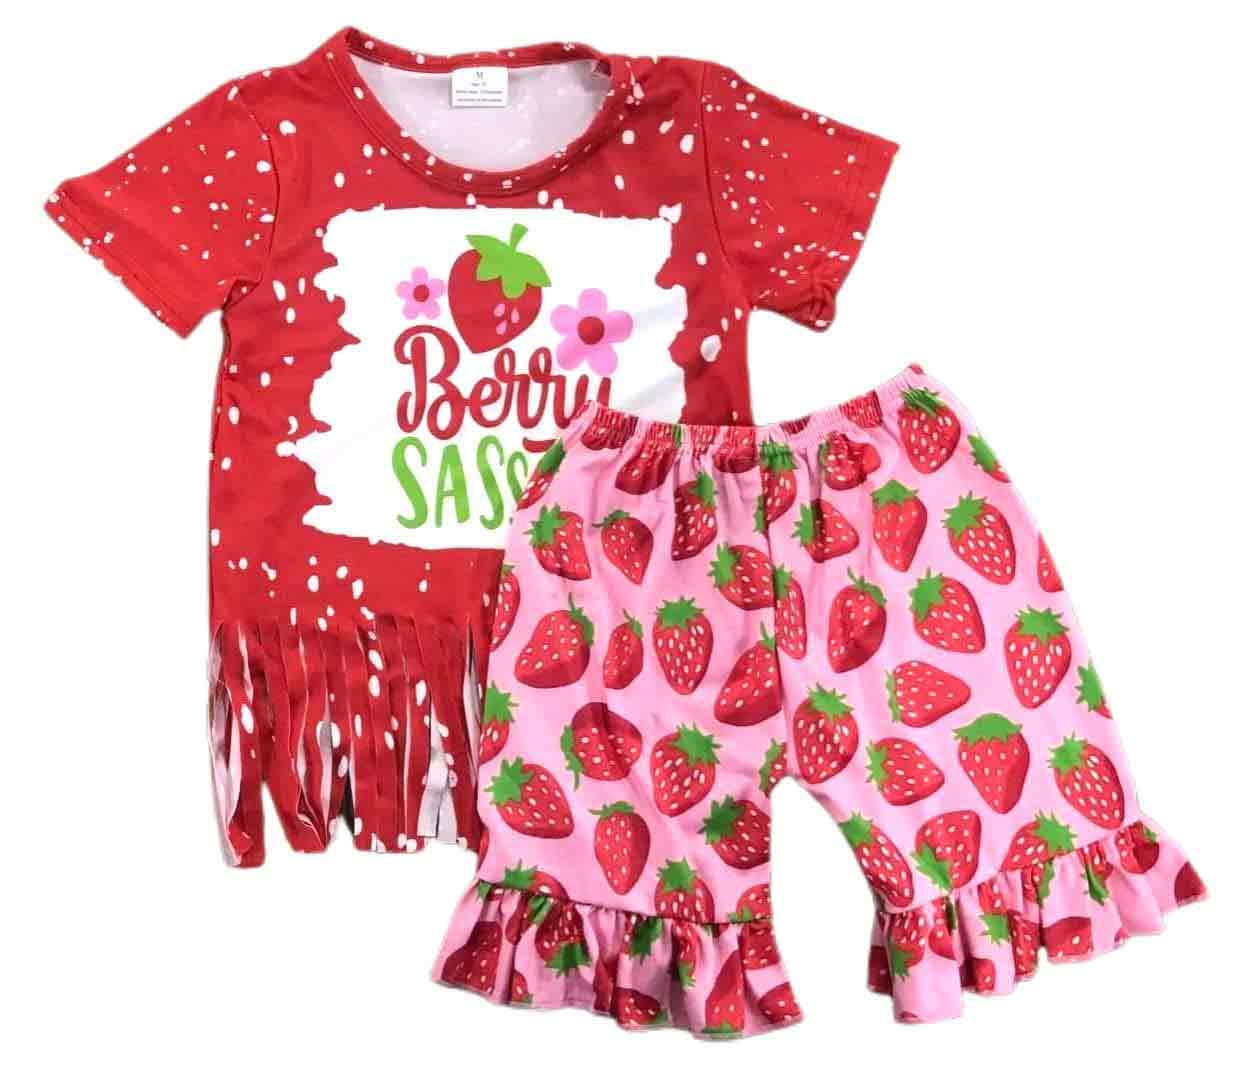 Berry Sassy Shorts Set